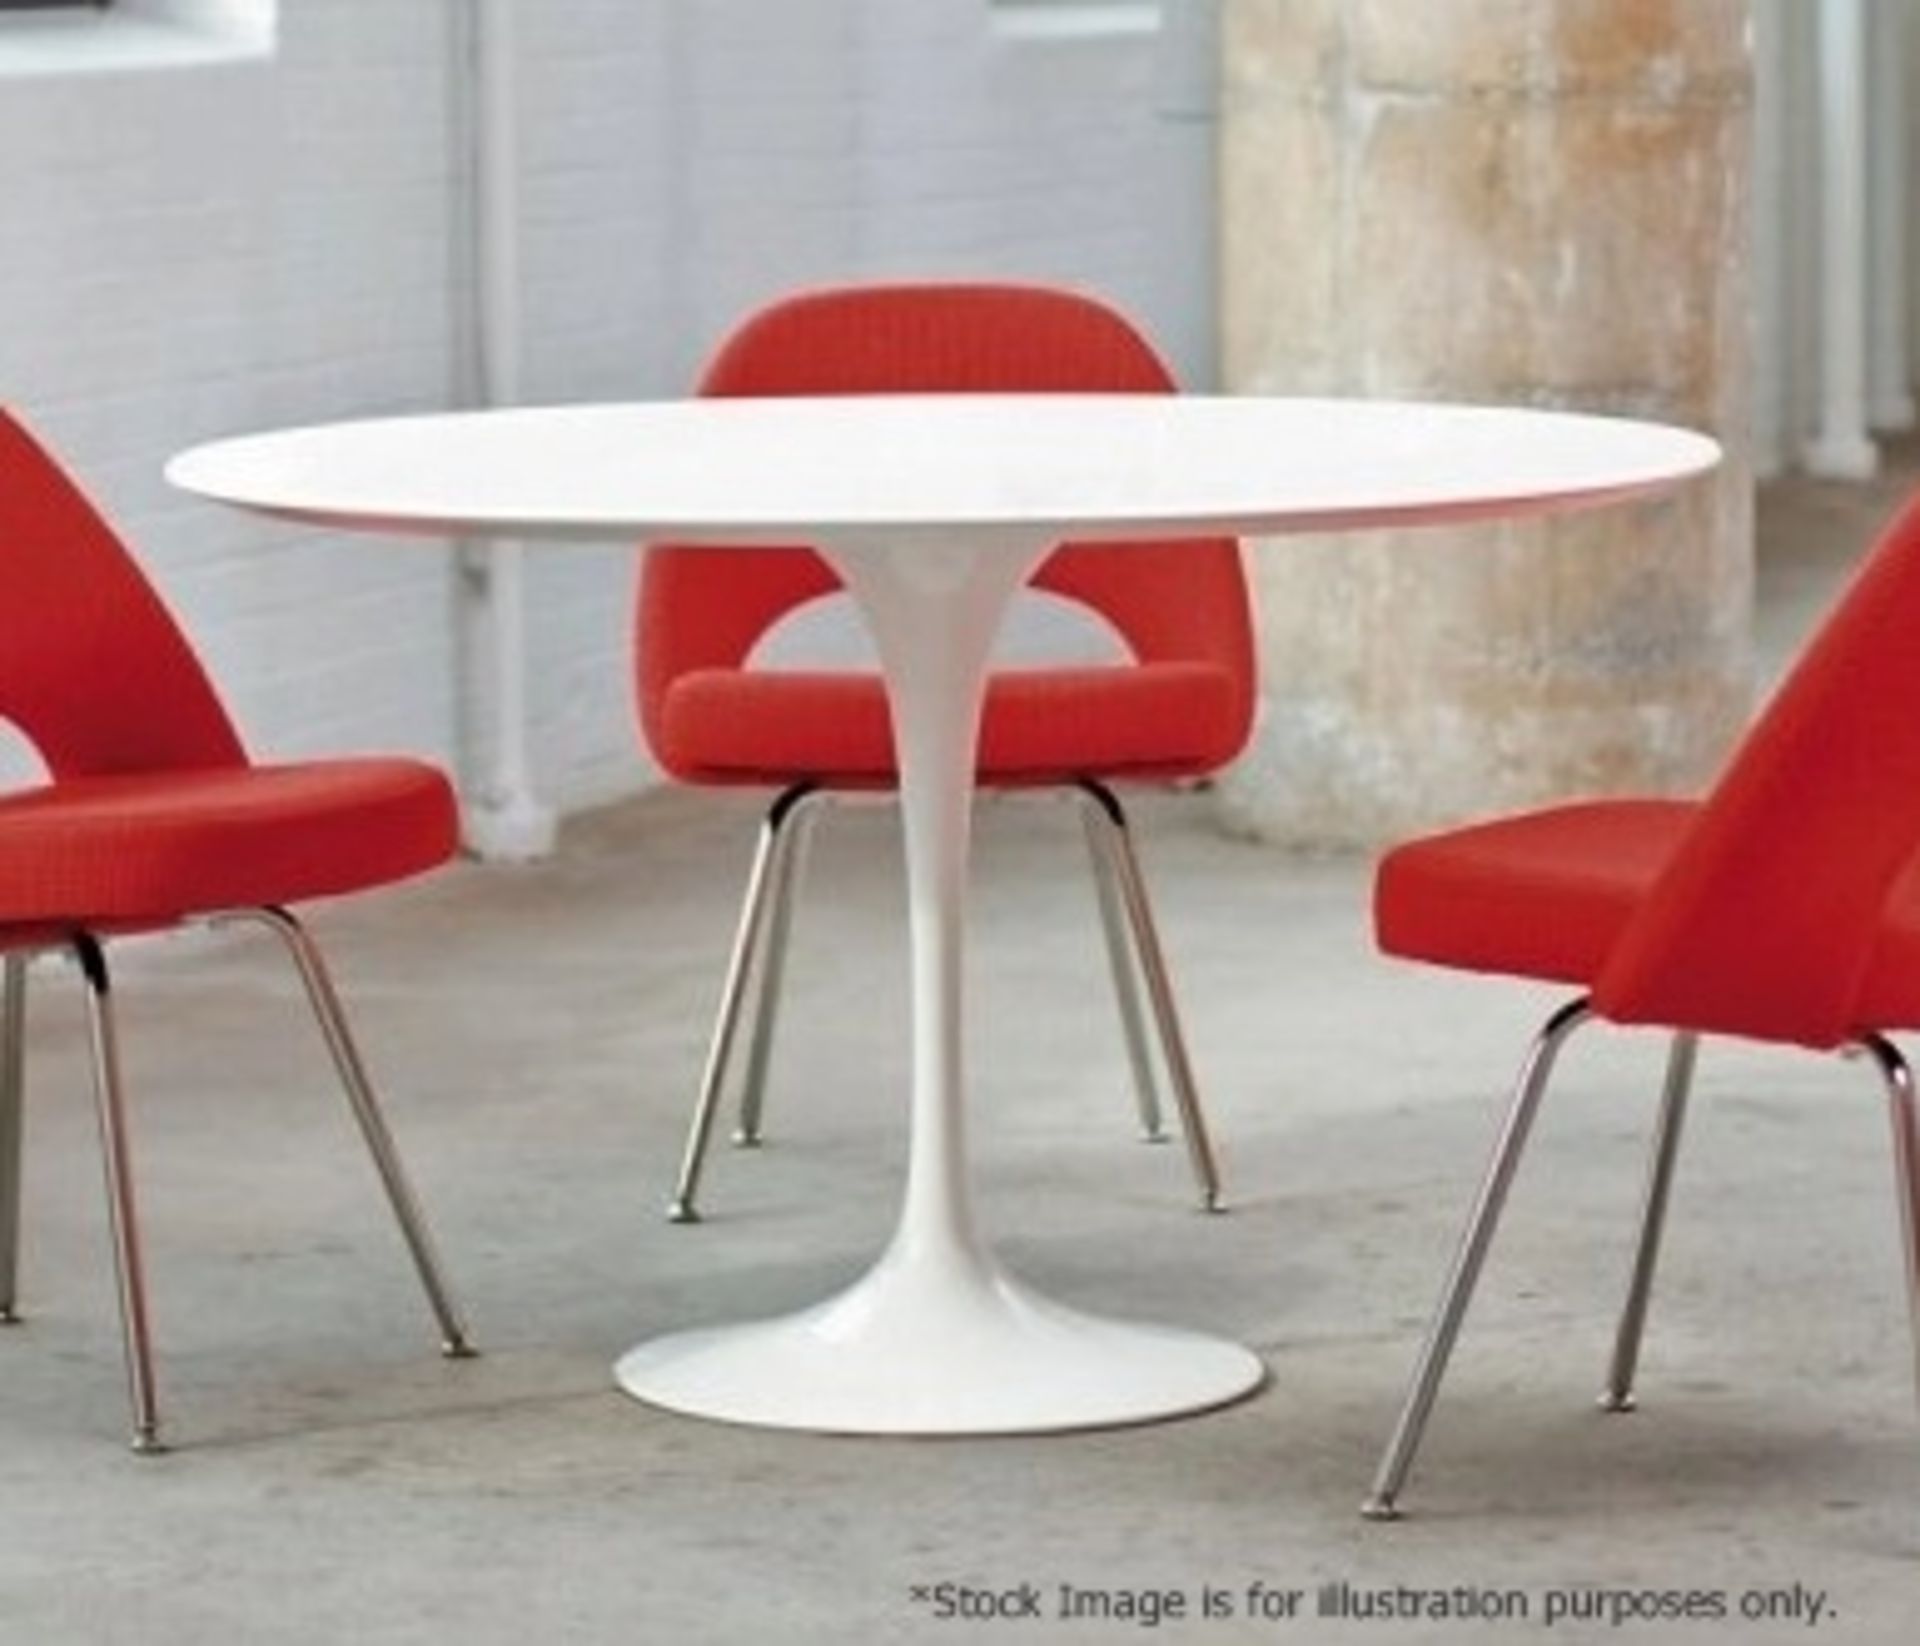 1 x Eero Saarinen Inspired Tulip 90cm Table In White - Dimensions: Height: 74cm / Diameter 90cm -